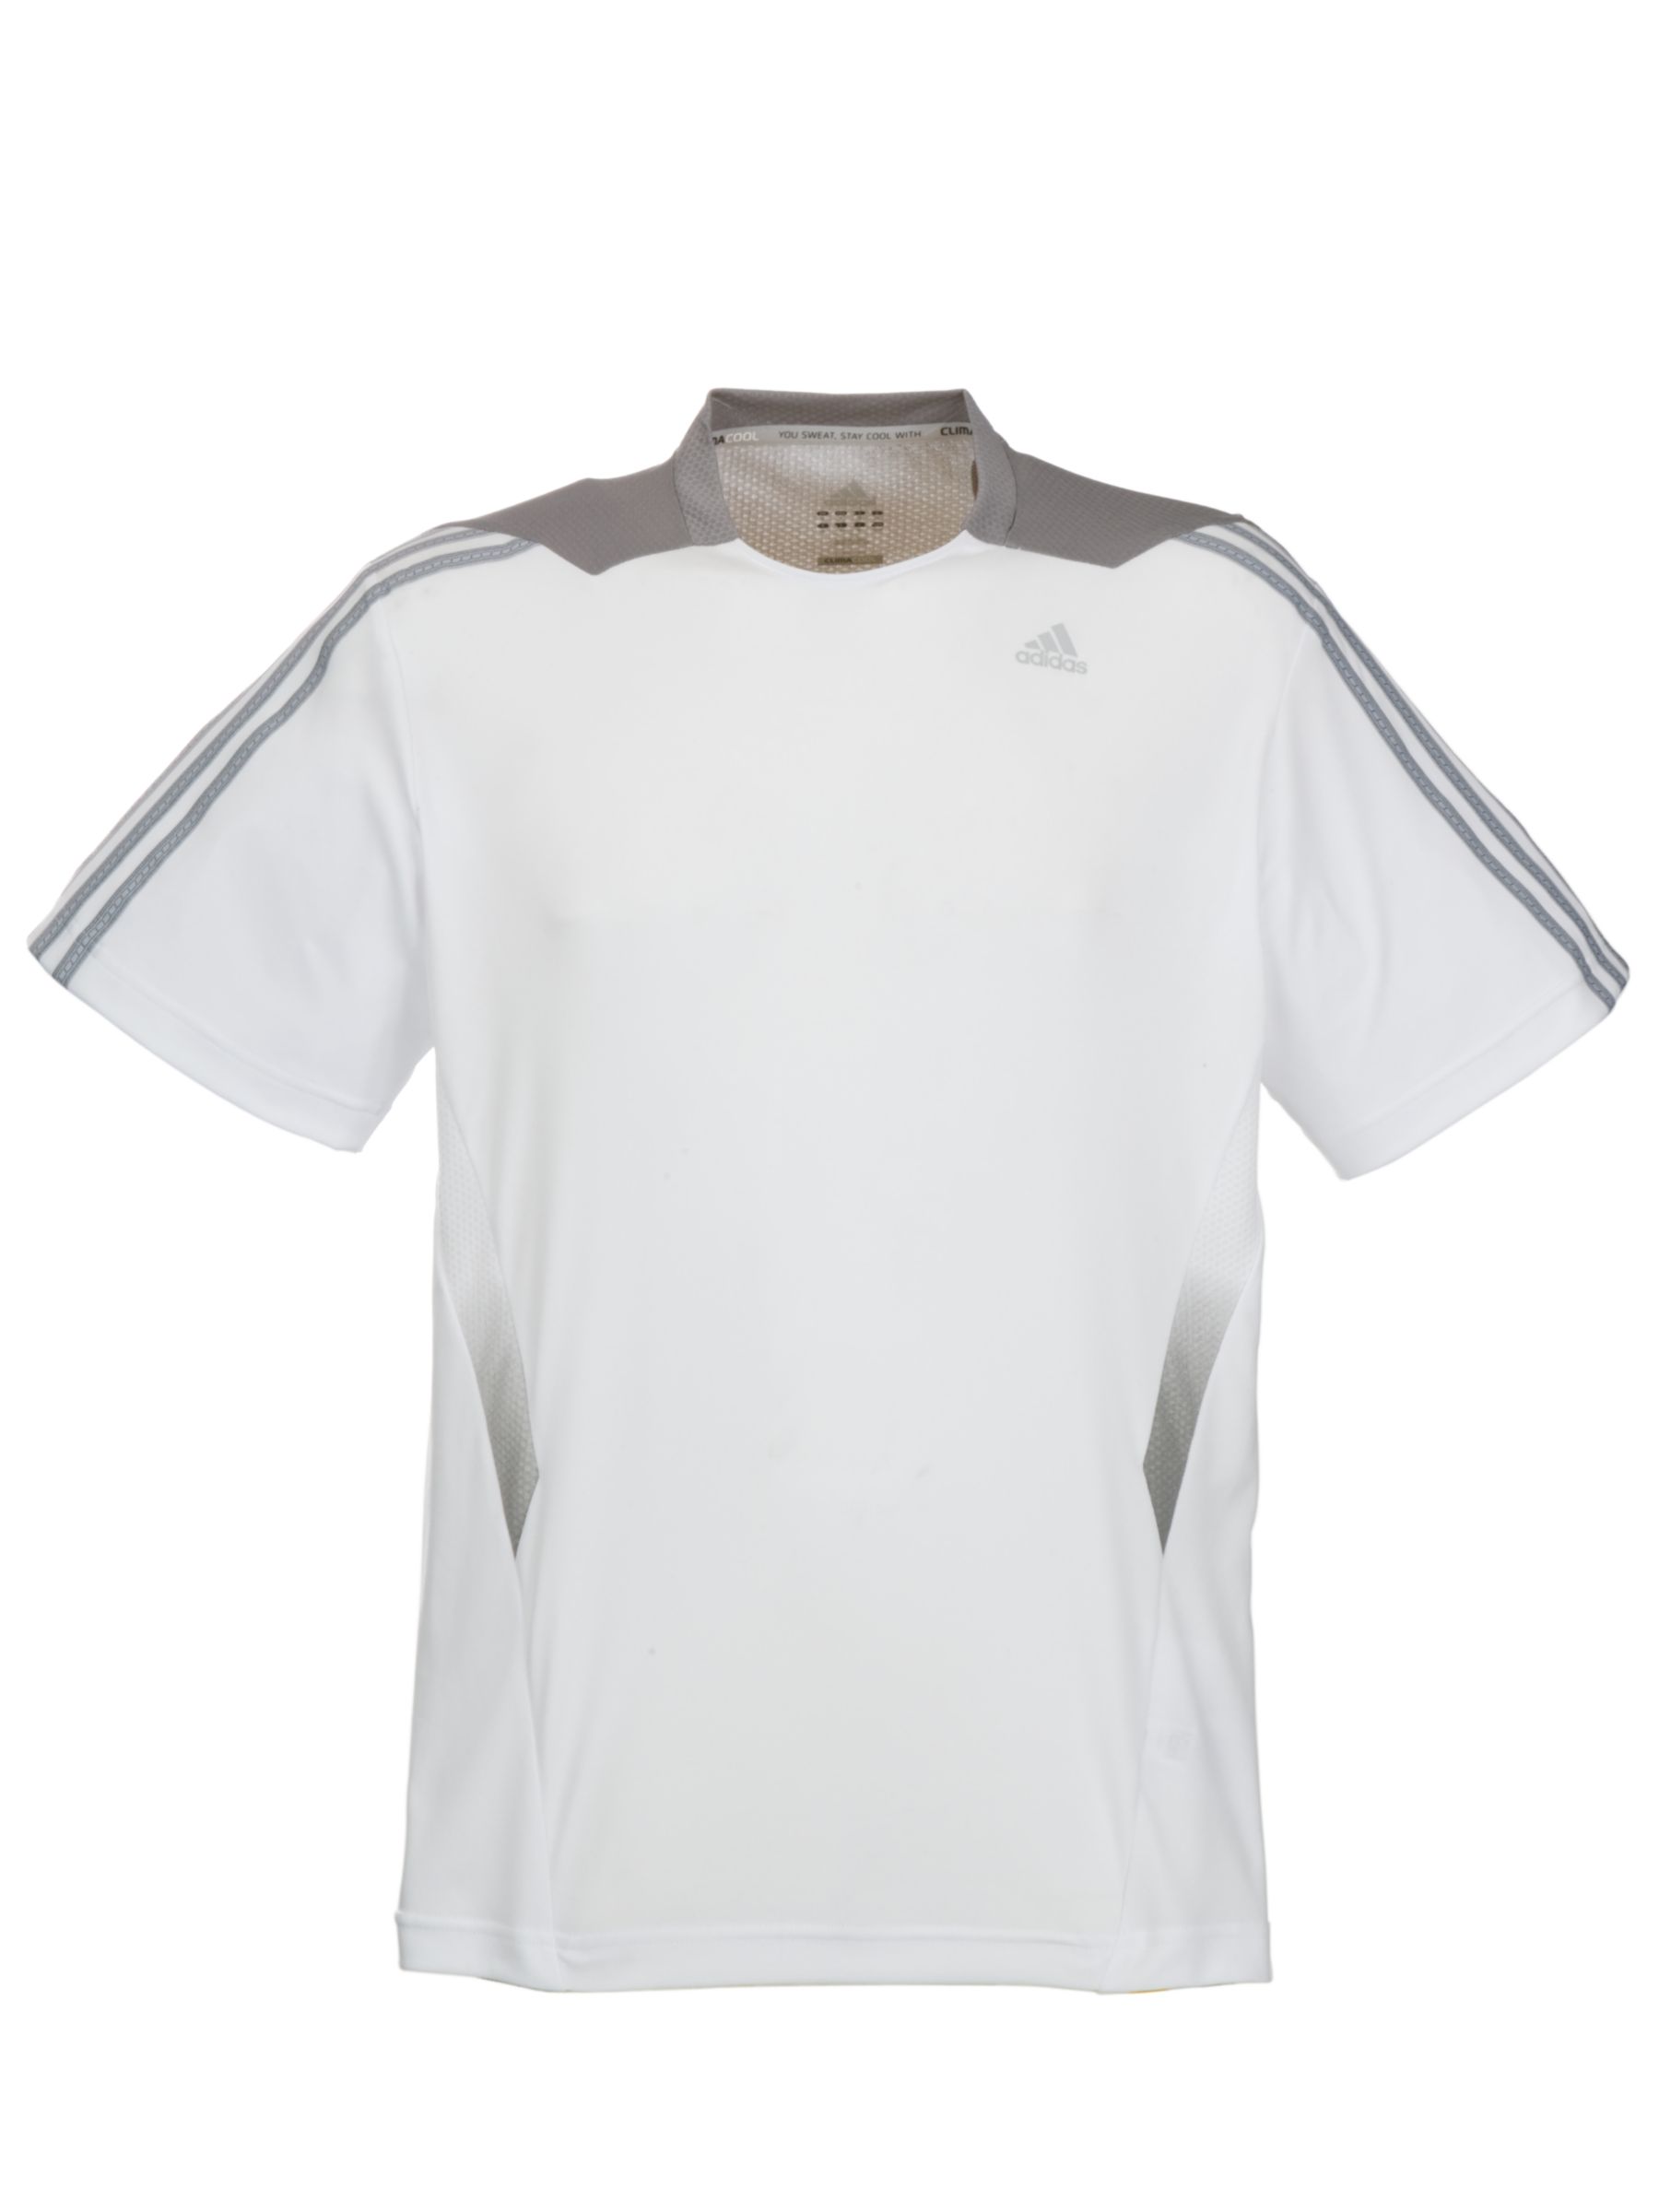 Clima365 T-Shirt, White/Shift grey